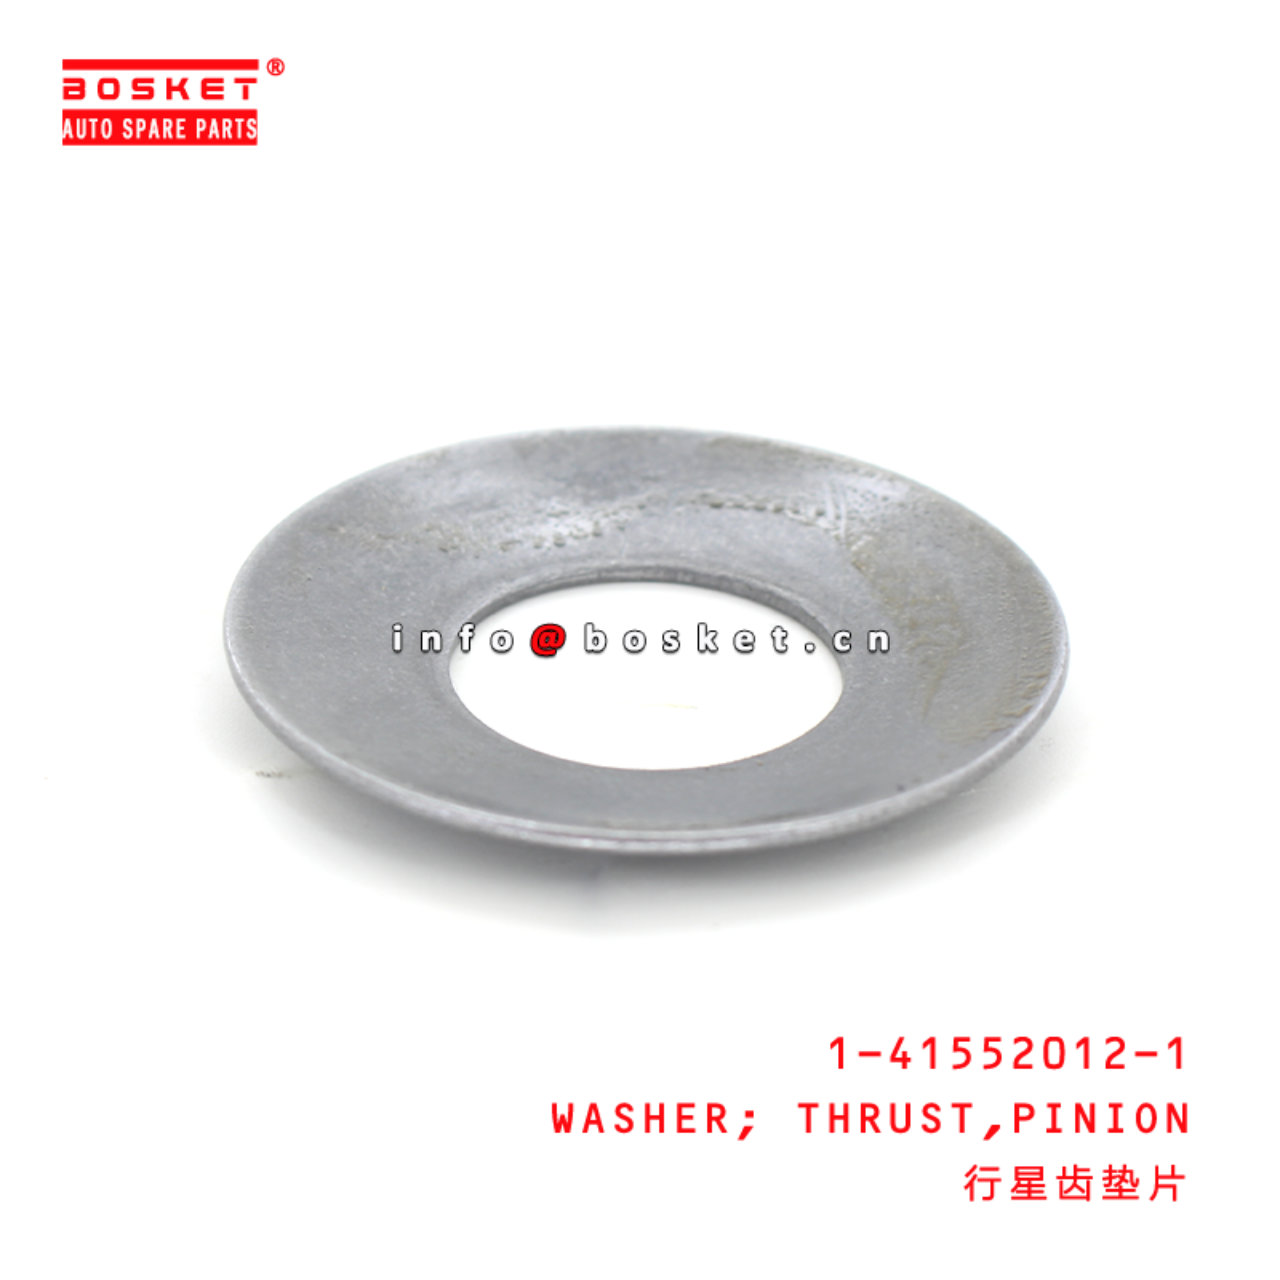  1-41552012-1 Pinion Thrust Washer 1415520121 Suitable for ISUZU XD